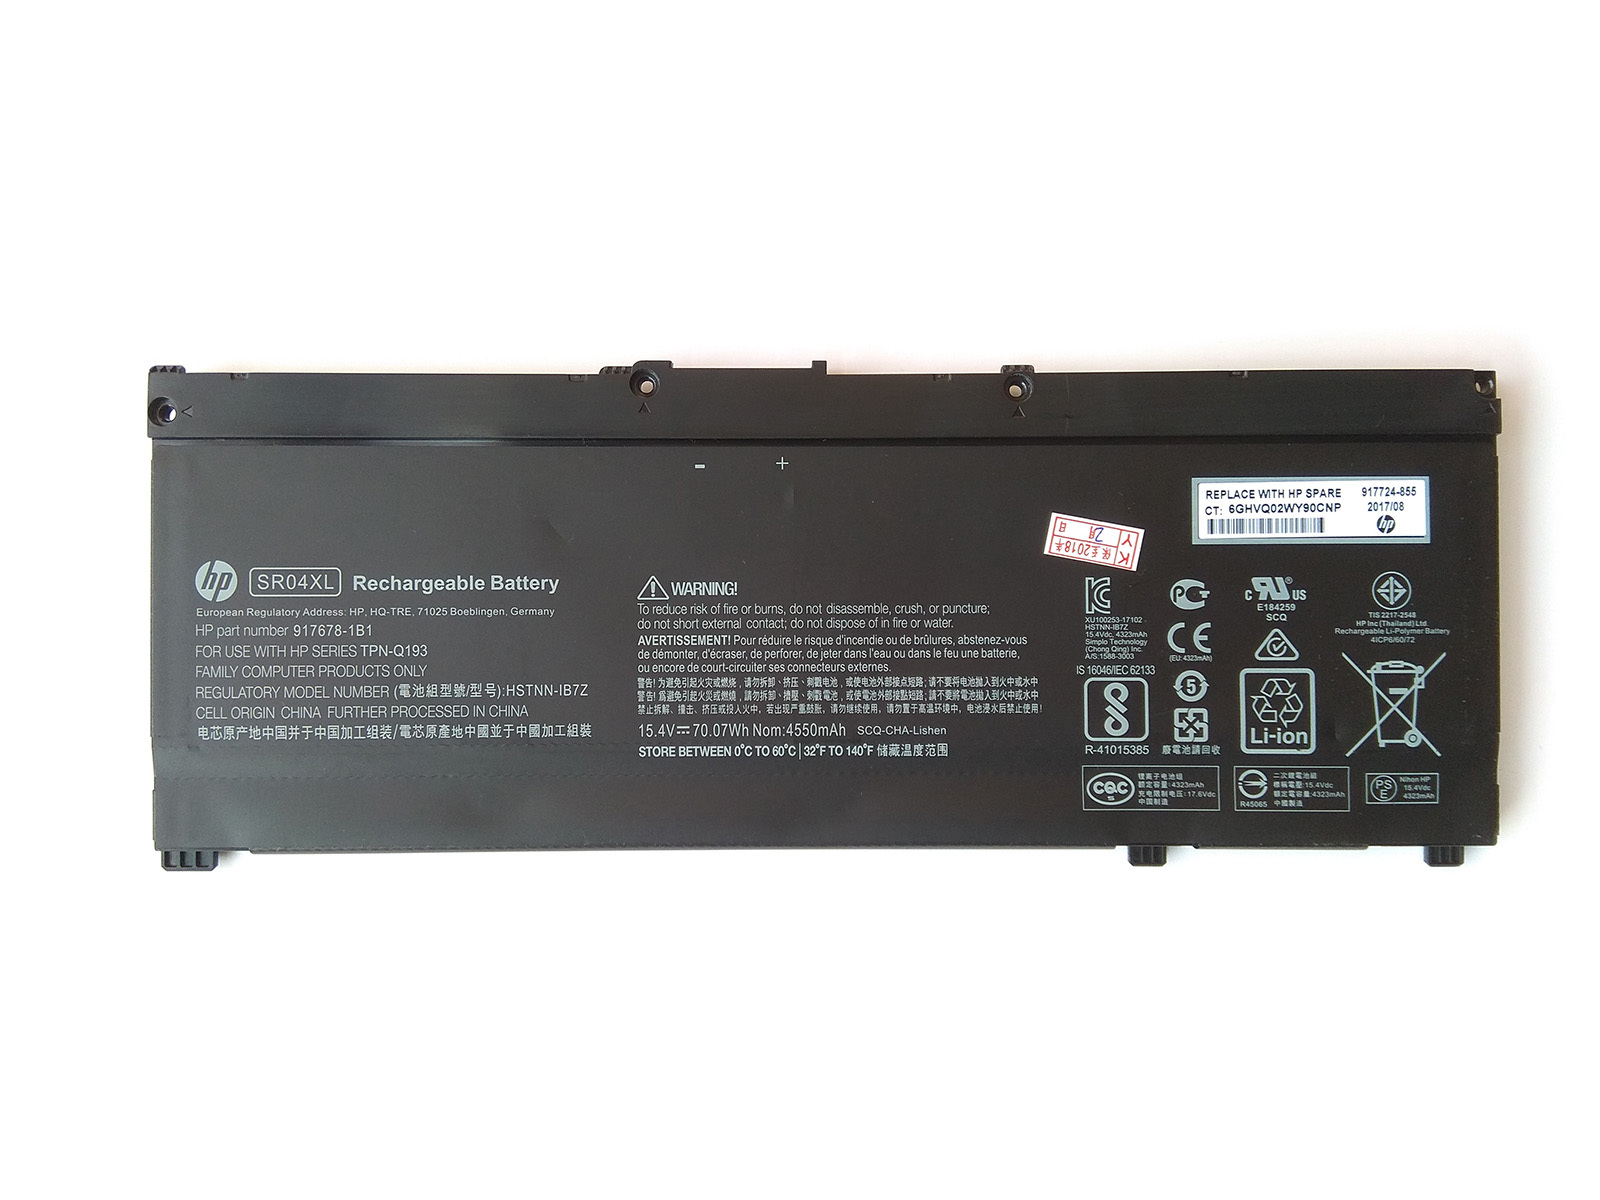 HP Omen 15-CE007NP 1VP75EA Battery SR04XL 917724-855 TPN-Q193 - $69.99